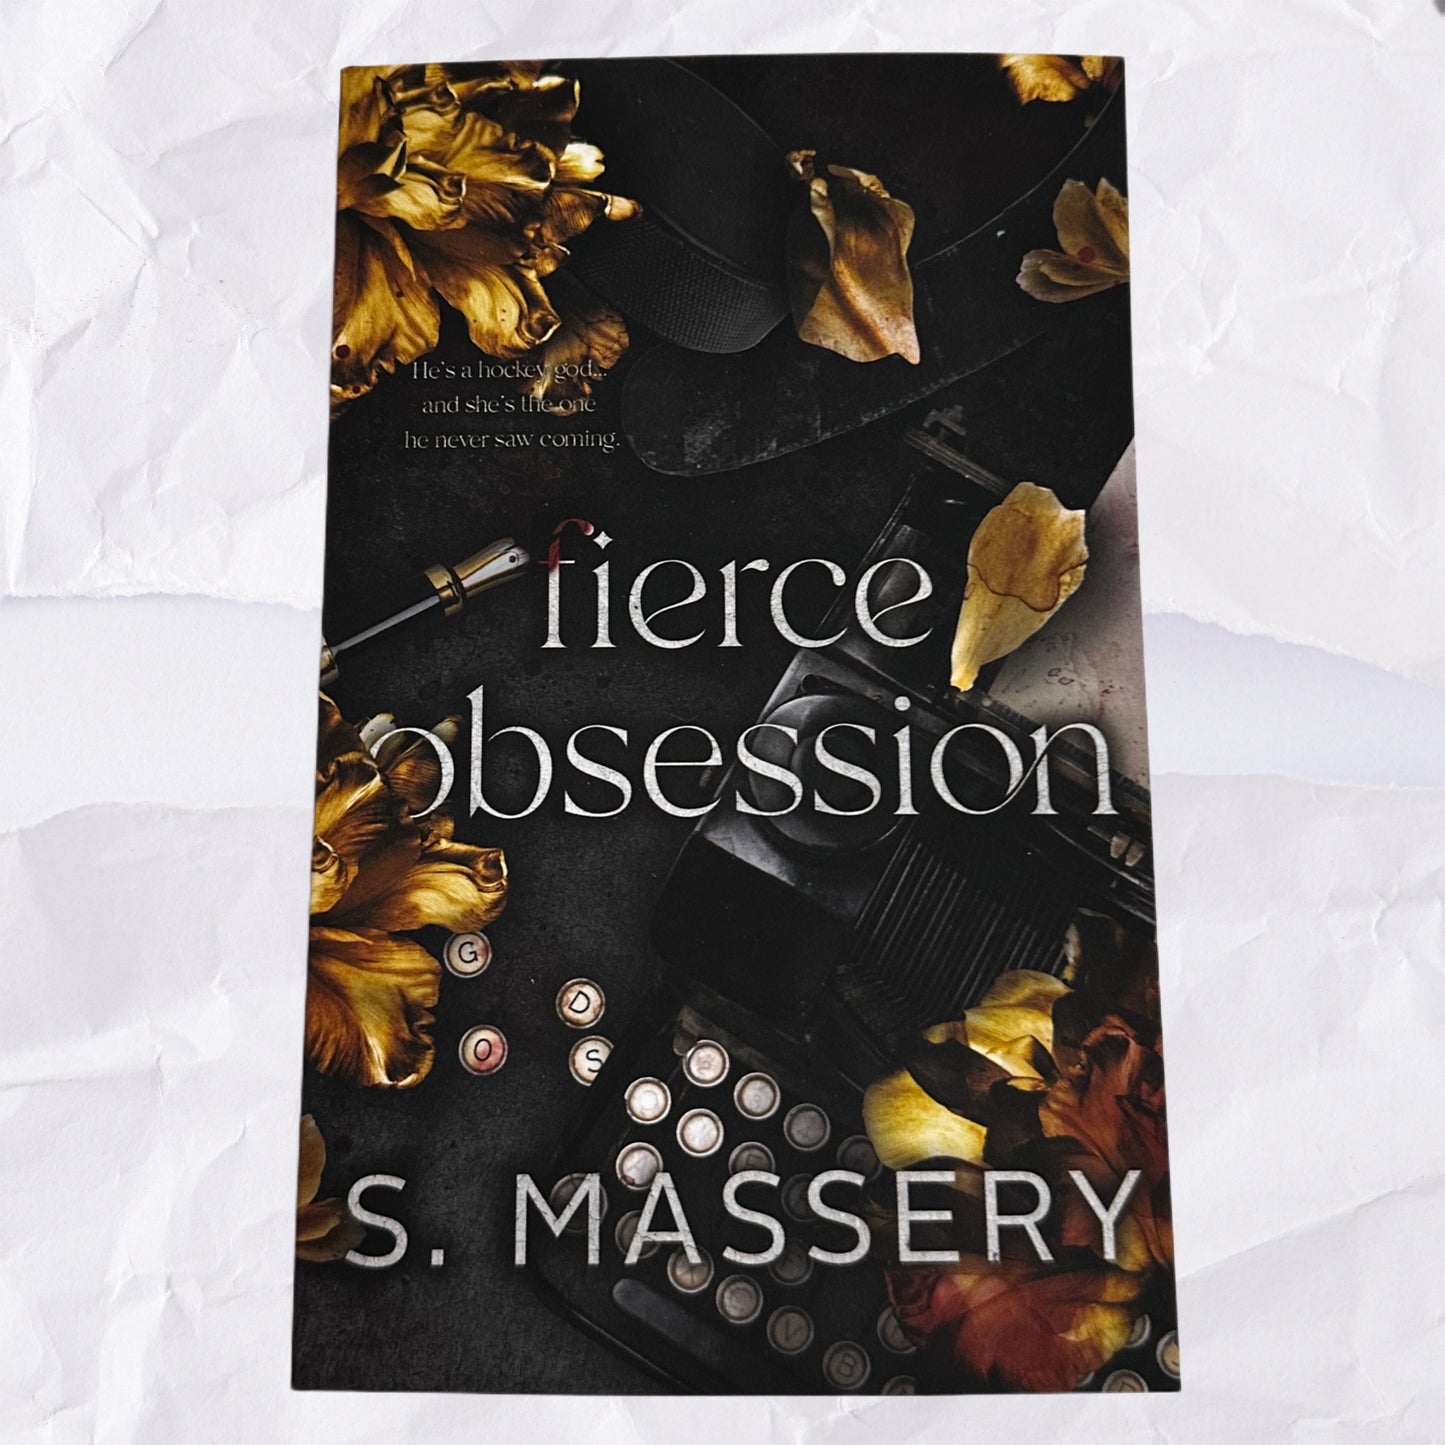 Fierce Obsession (Hockey Gods #5) by S. Massery - Alternate Cover